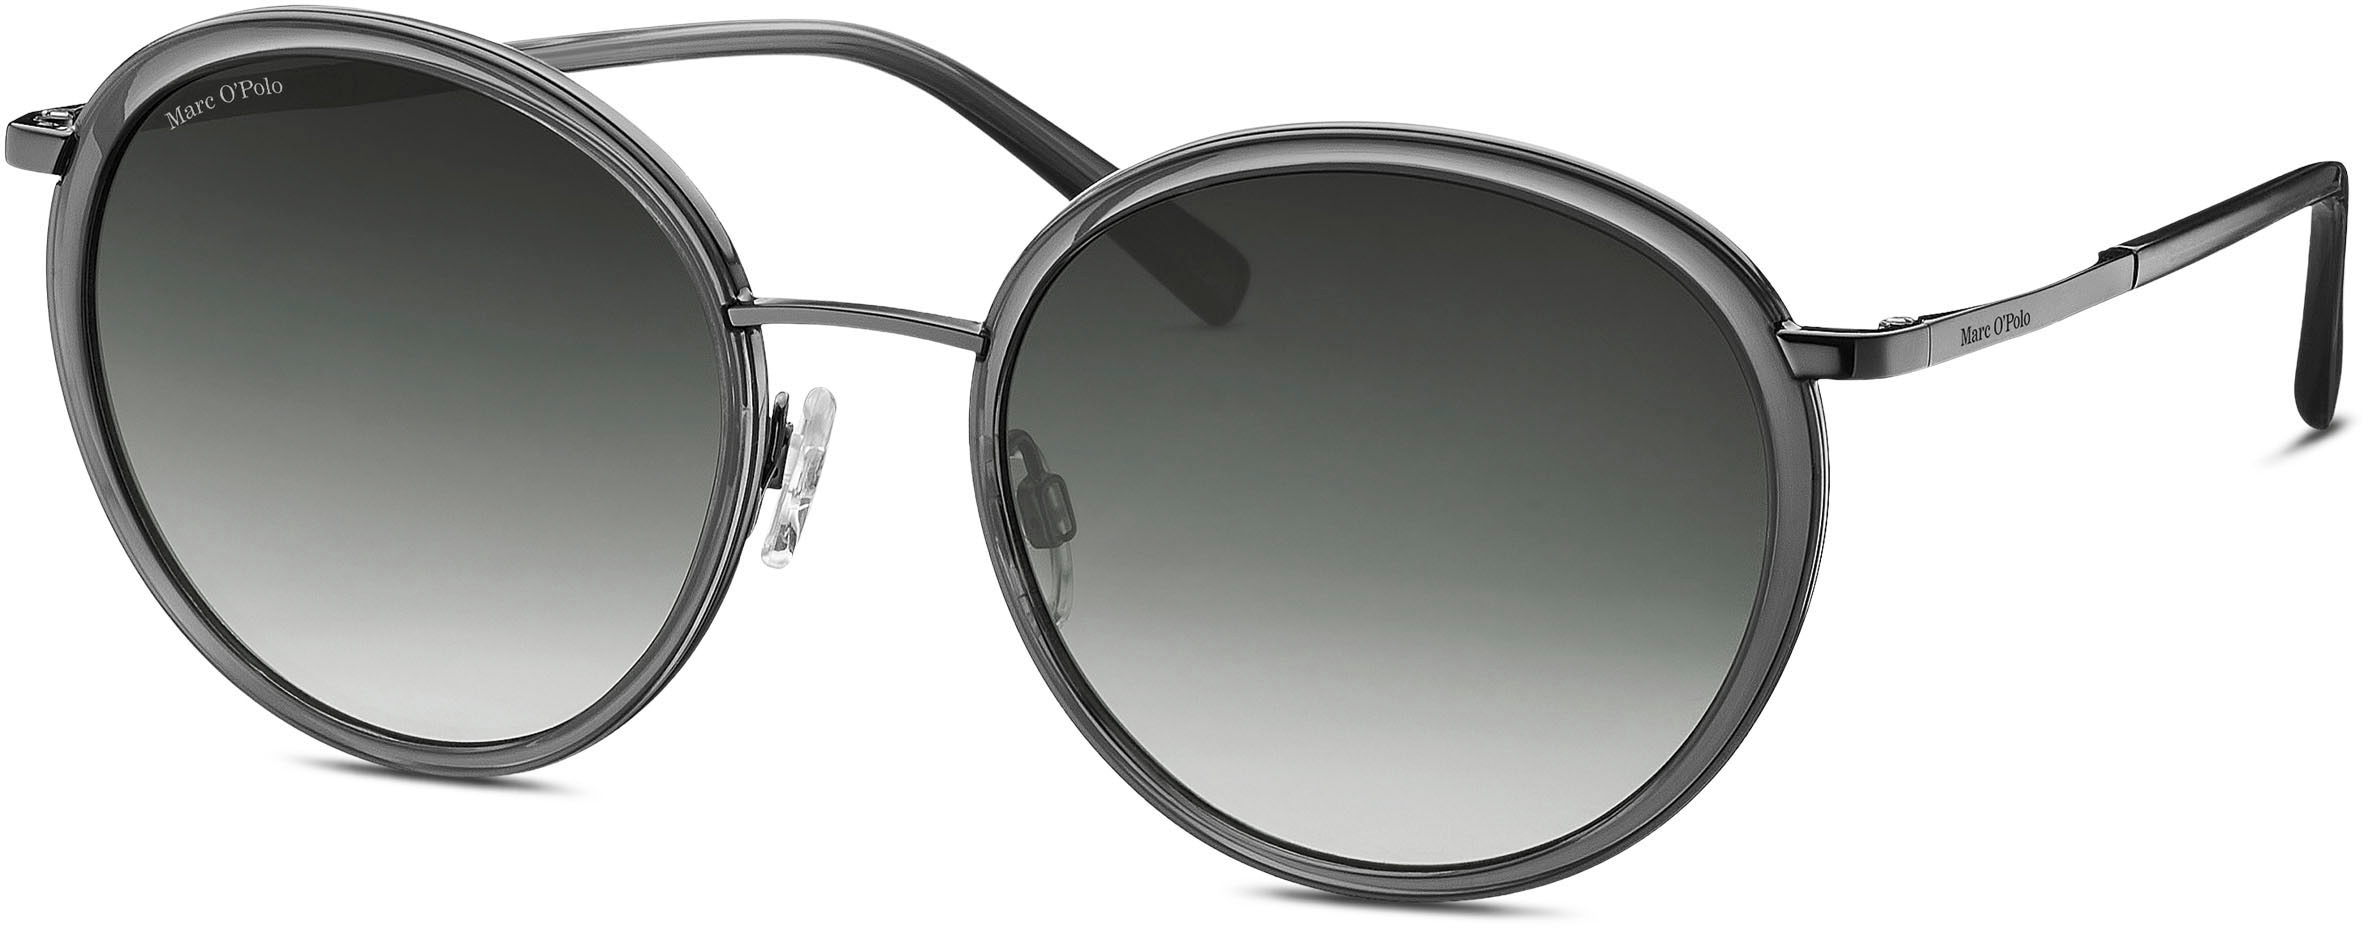 Sonnenbrille »Modell 505109«, Panto-Form